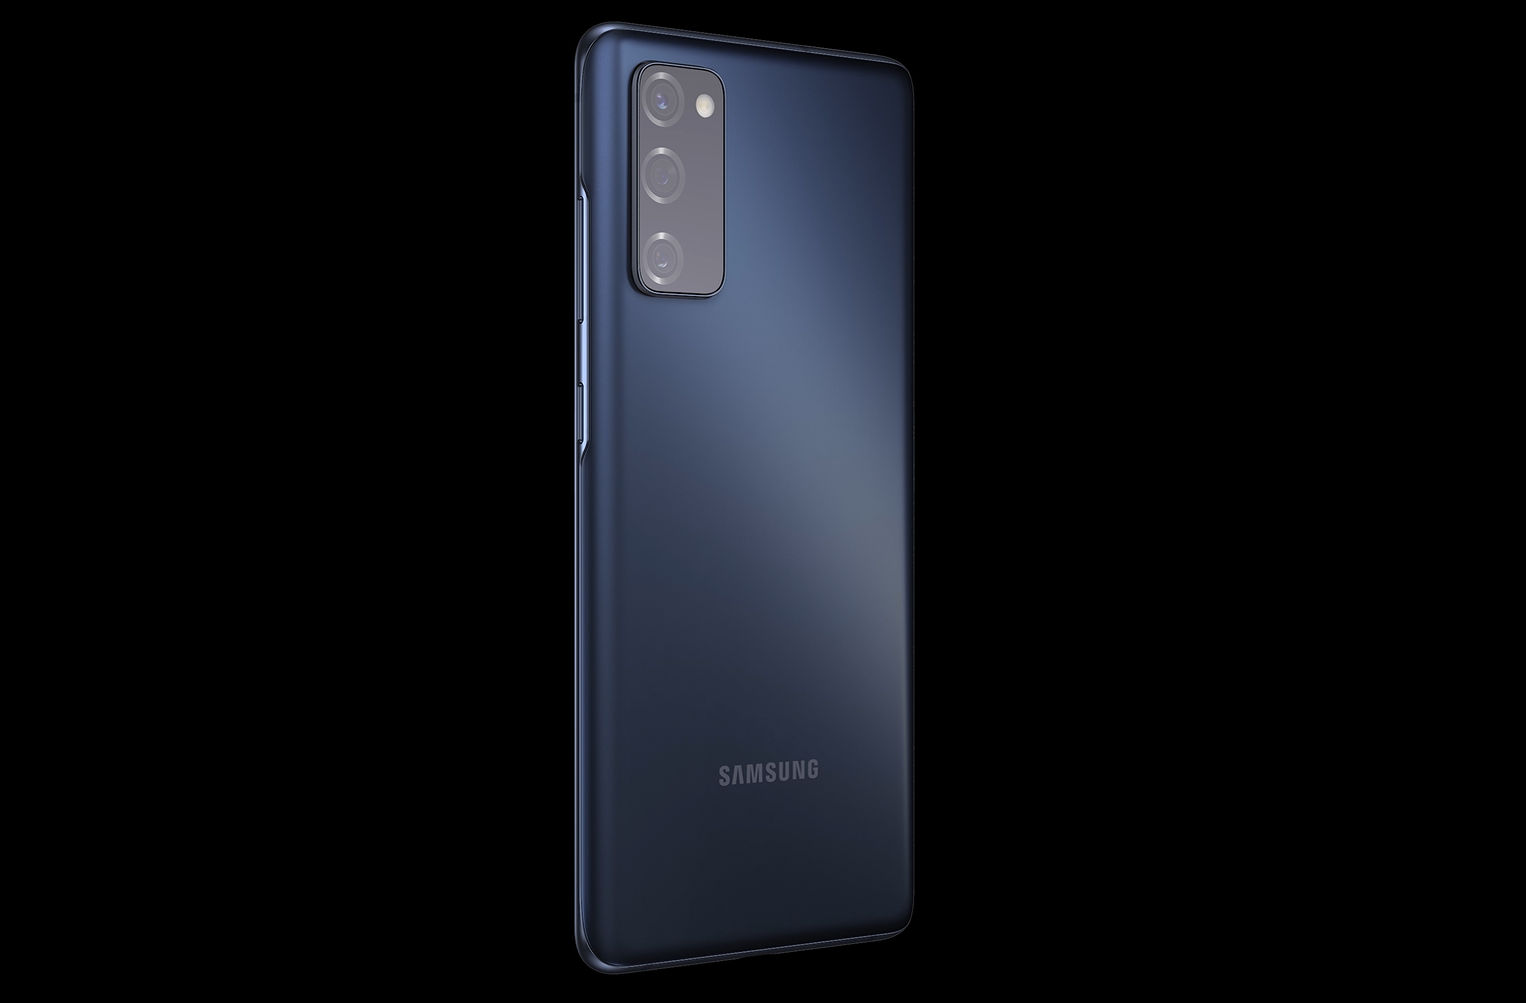 Samsung Galaxy S20 FE 5G UW: Price & Features